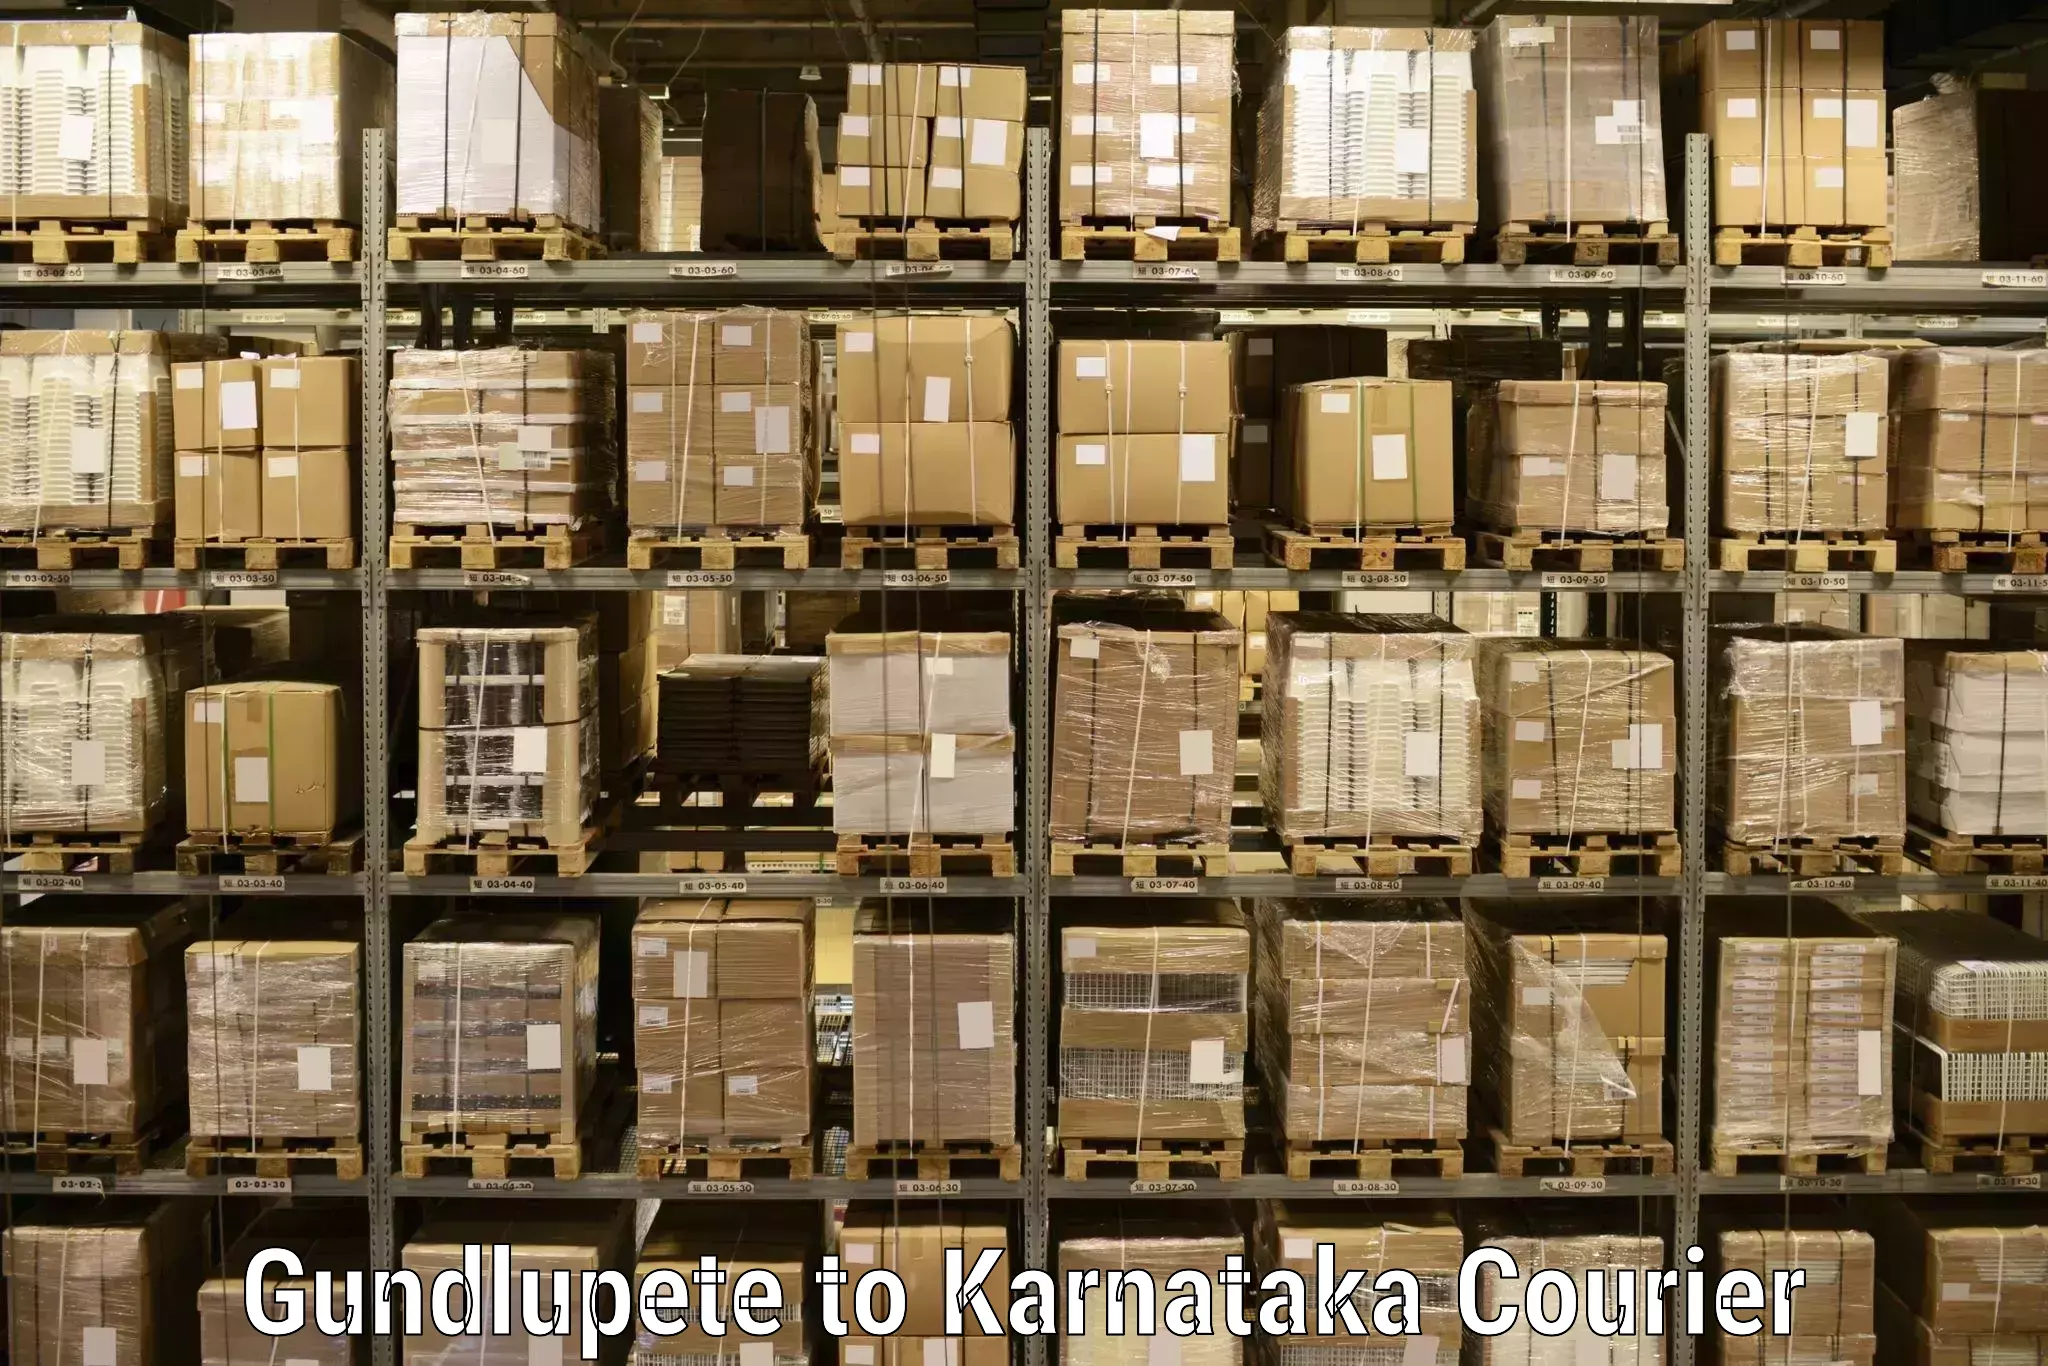 Courier service innovation Gundlupete to Karnataka